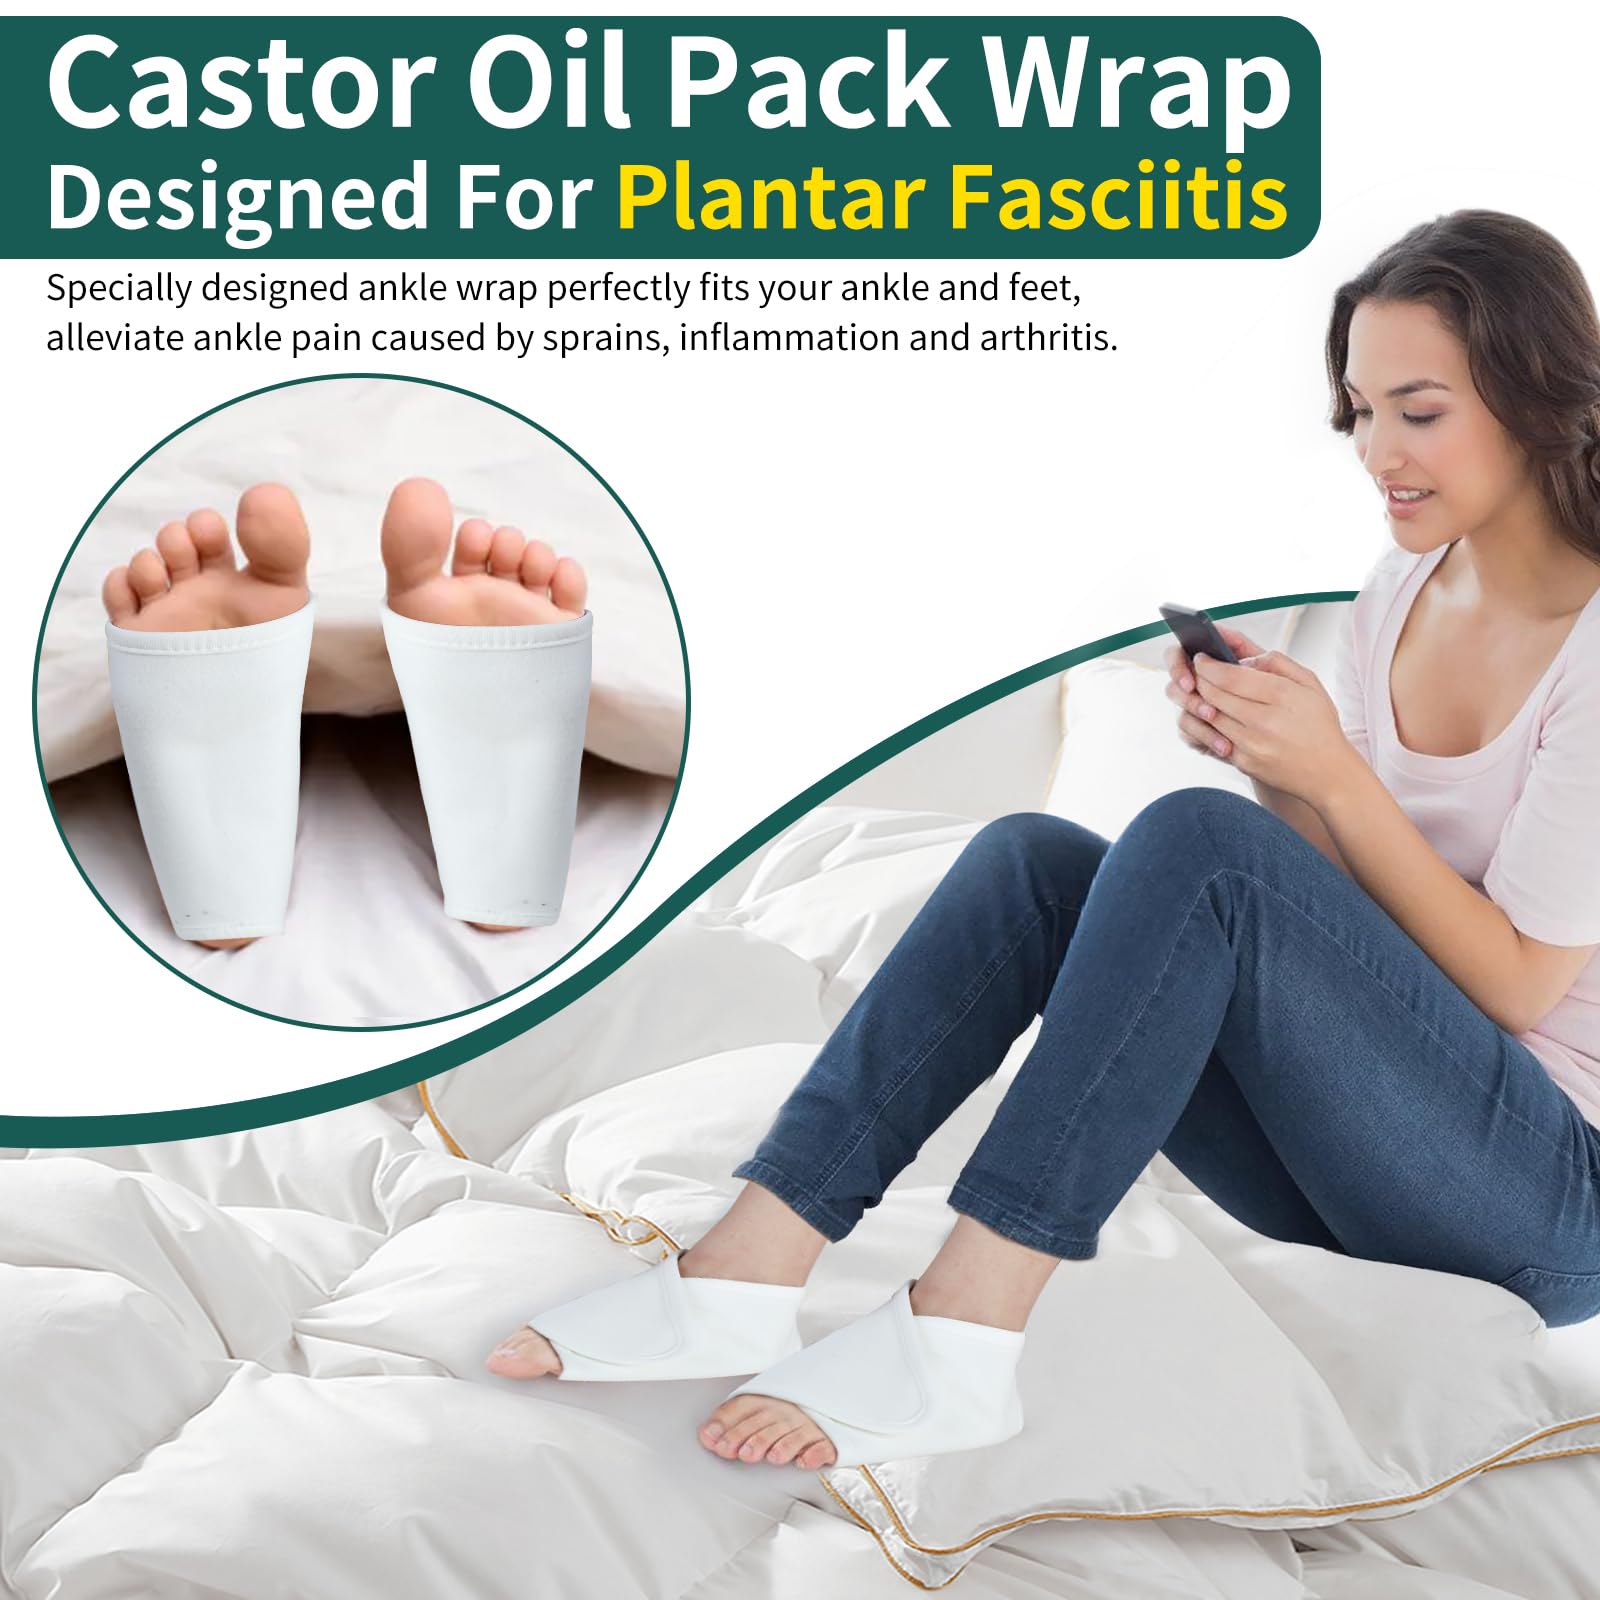 Castor Oil Pack Wrap for Ankle 2pcs, Adjustable Ankle Wrap for Plantar Fasciitis Relief, Reusable Plantar Fasciitis Brace Castor Oil Compress for Women & Men Ankle Support